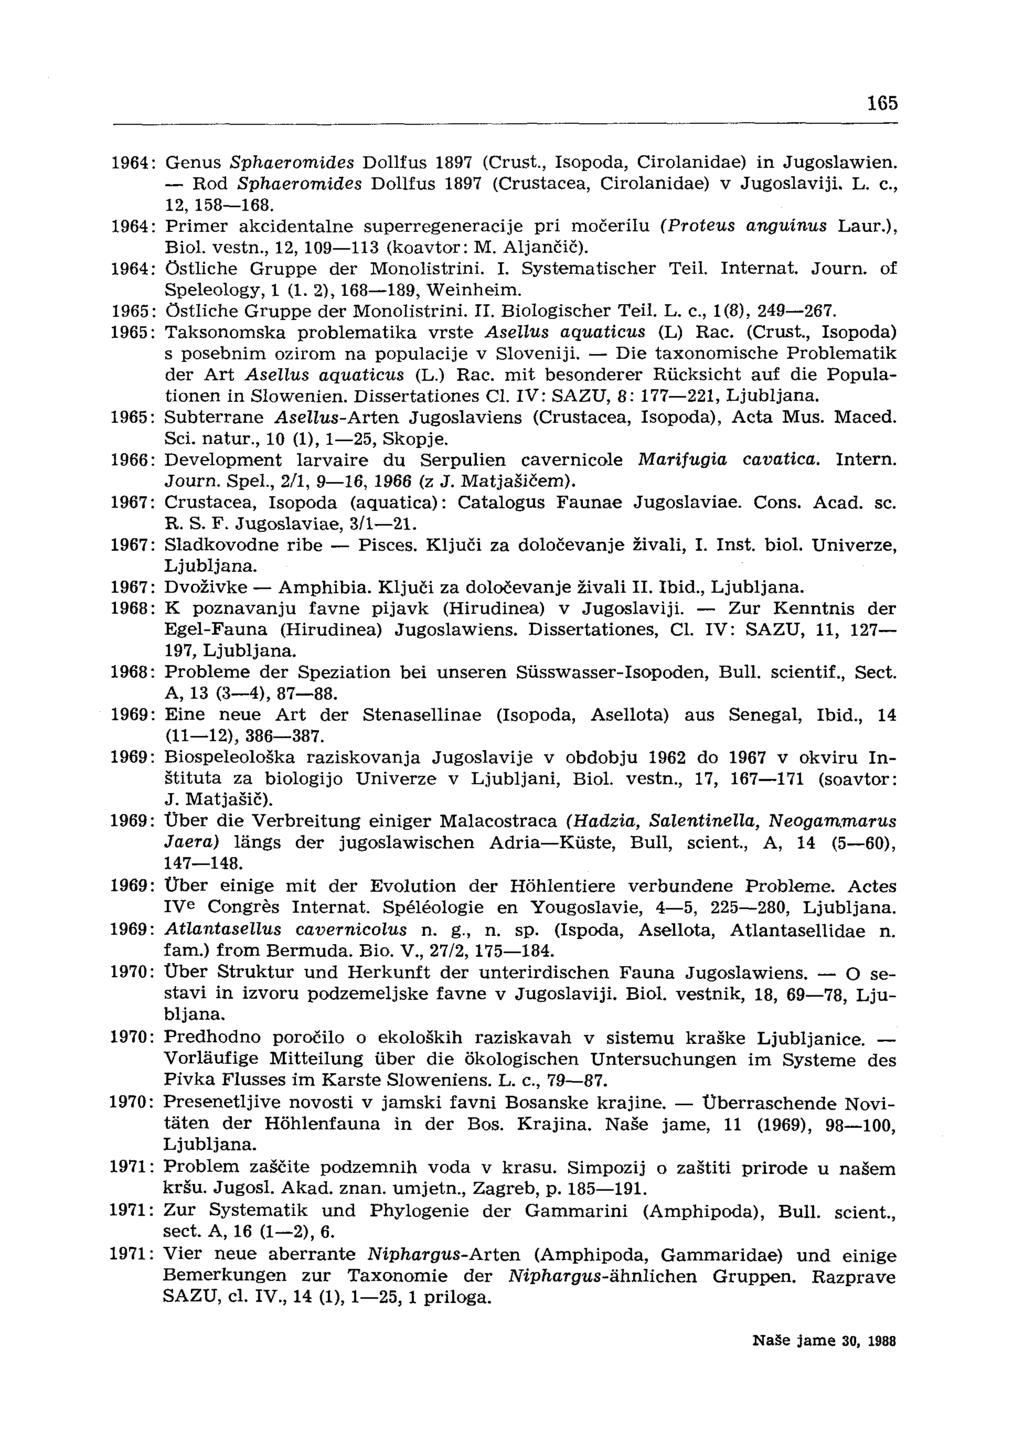 165 1964: Gen us Sphaeromides Dollfus 1897 (Crust., Isopoda, Cirolanidae) in Jugoslawien. - Rod Sphaeromides Dollfus 1897 (Crustacea, Cirolanidae) v Jugoslaviji. L. c., 12, 158-168.